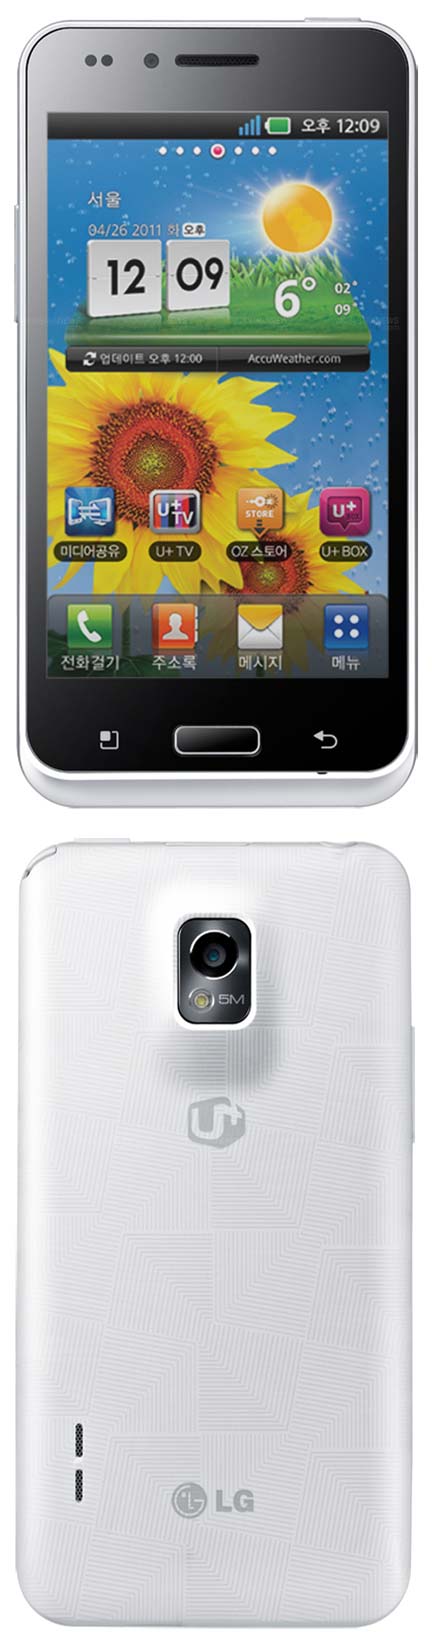 LG Optimus LG-LU6800 - недурственный гуглофон